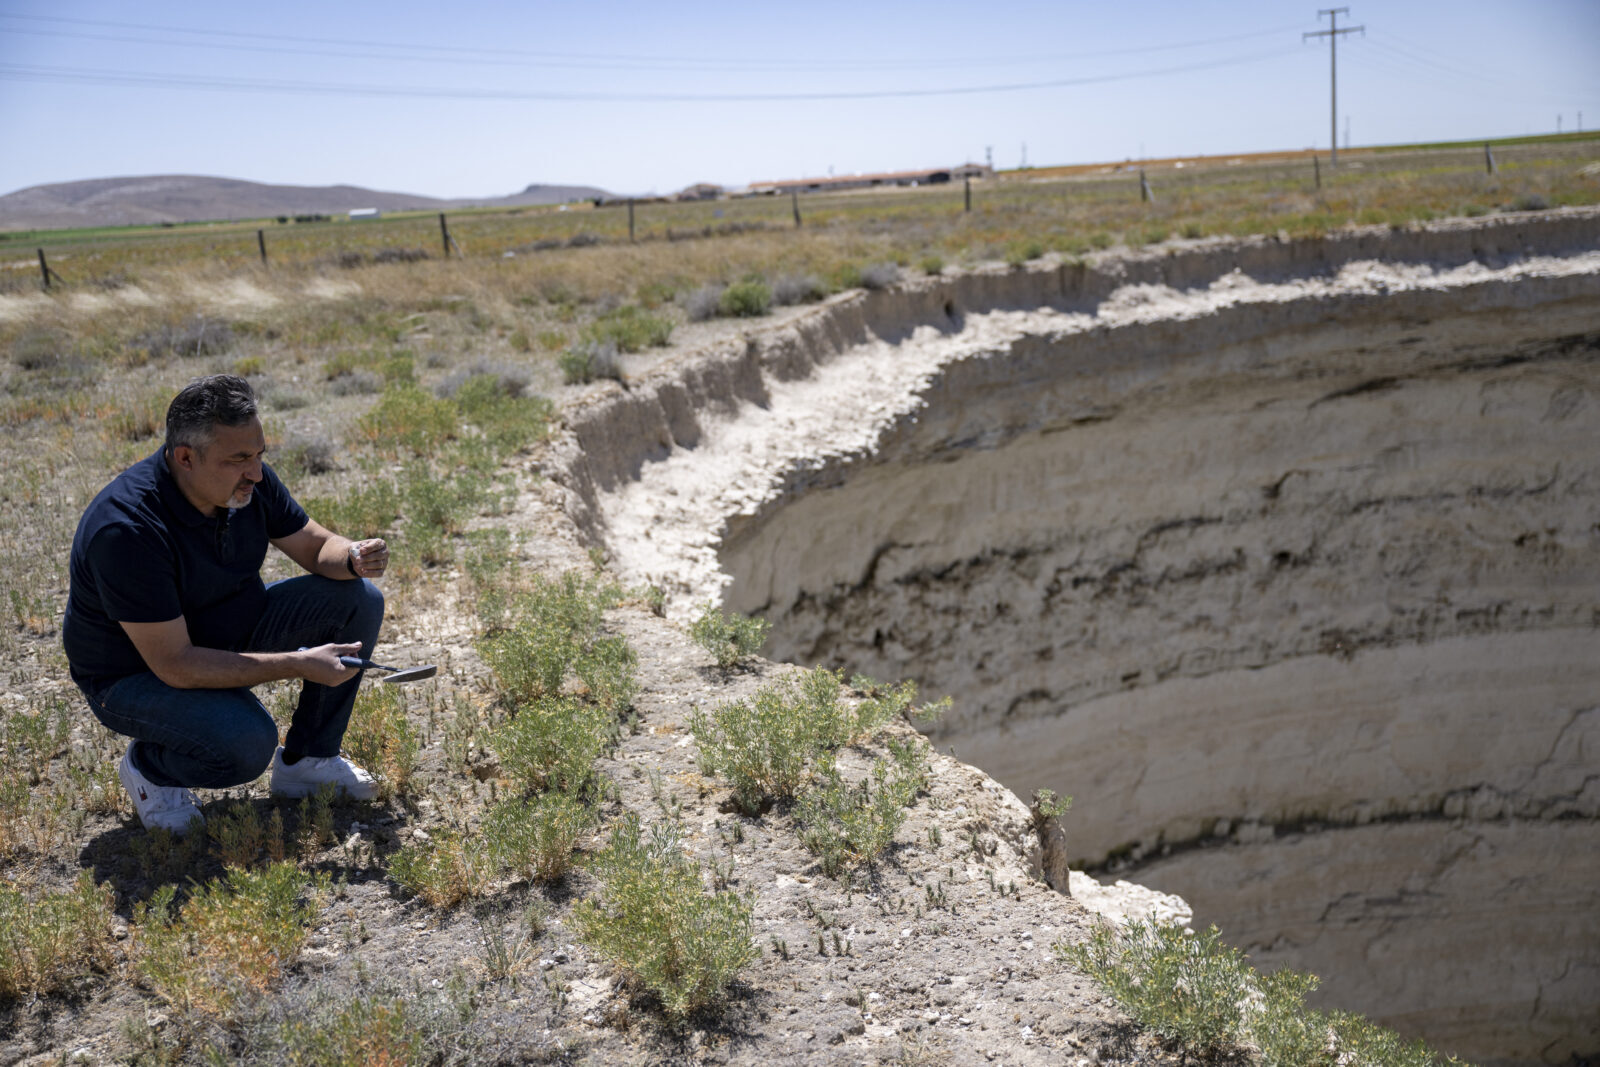 How do sinkholes threaten Turkish farmers' livelihoods in Konya?